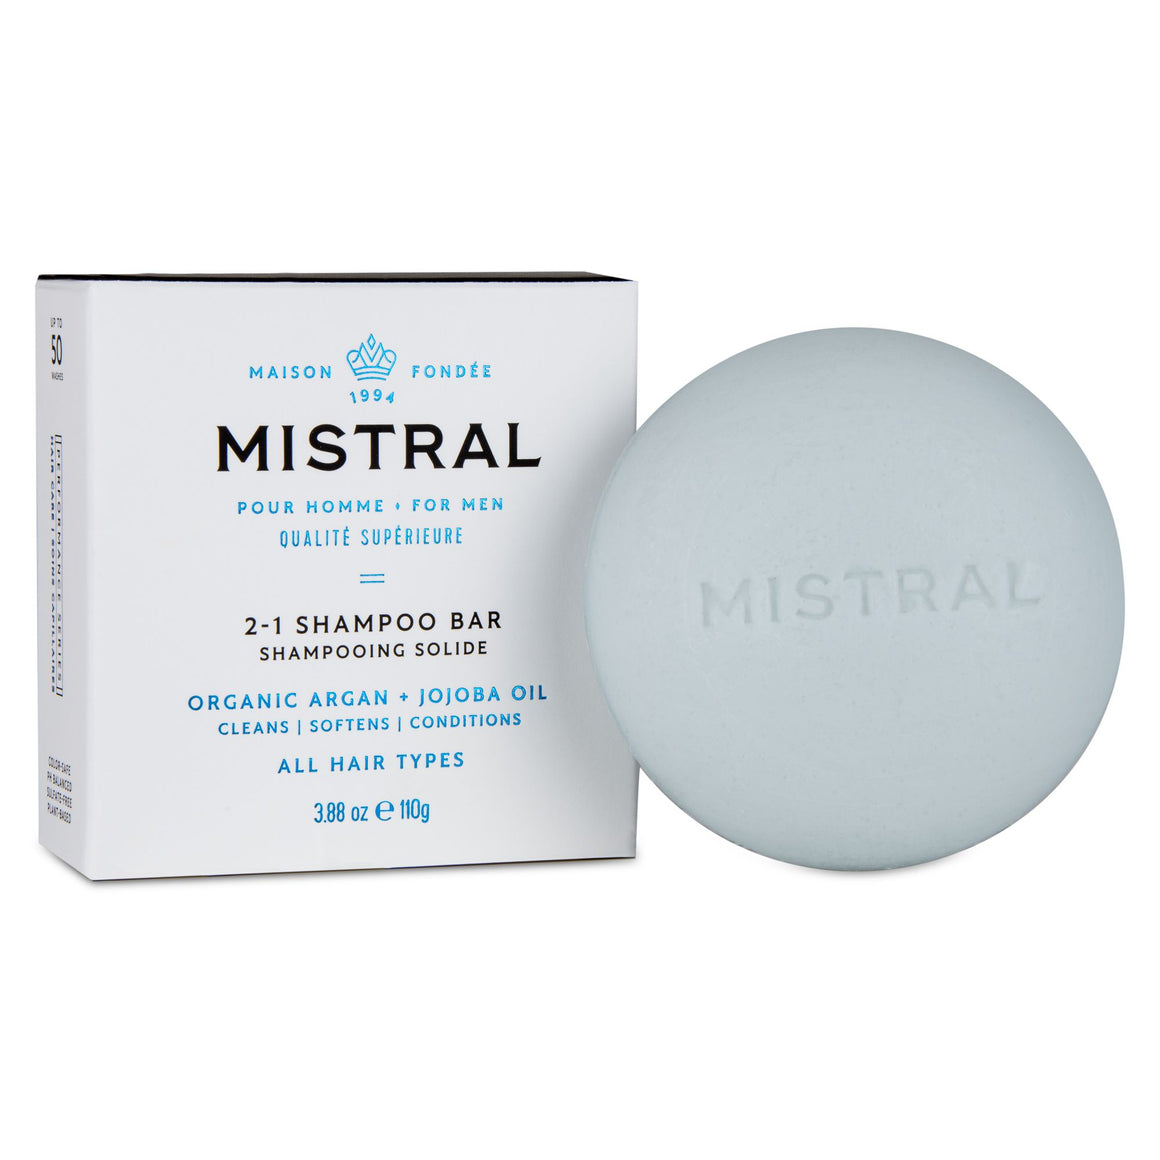 Men's Exfoliating Soap Performance Series Mistral Men's Collection - 250g